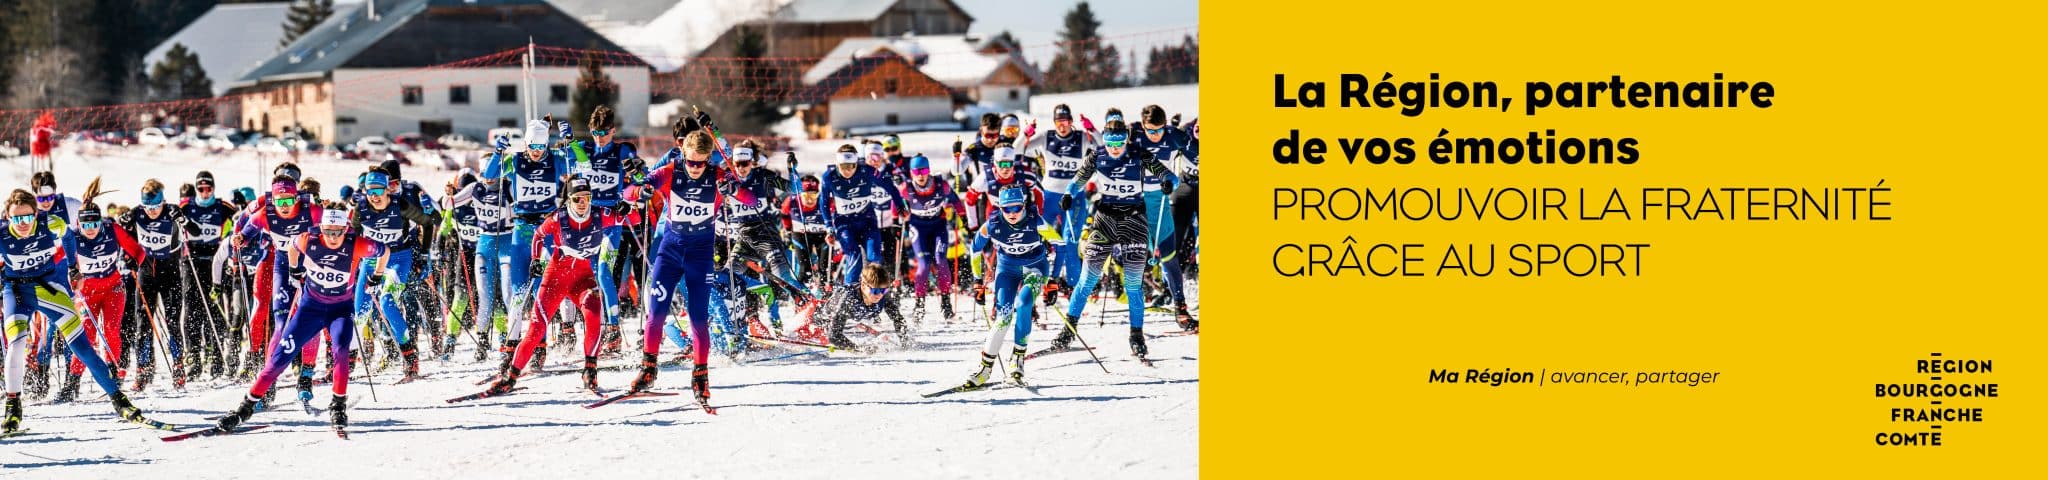 The Bourgogne-Franche-Comté region partners with La Transju cross-country ski race in the Jura Mountains